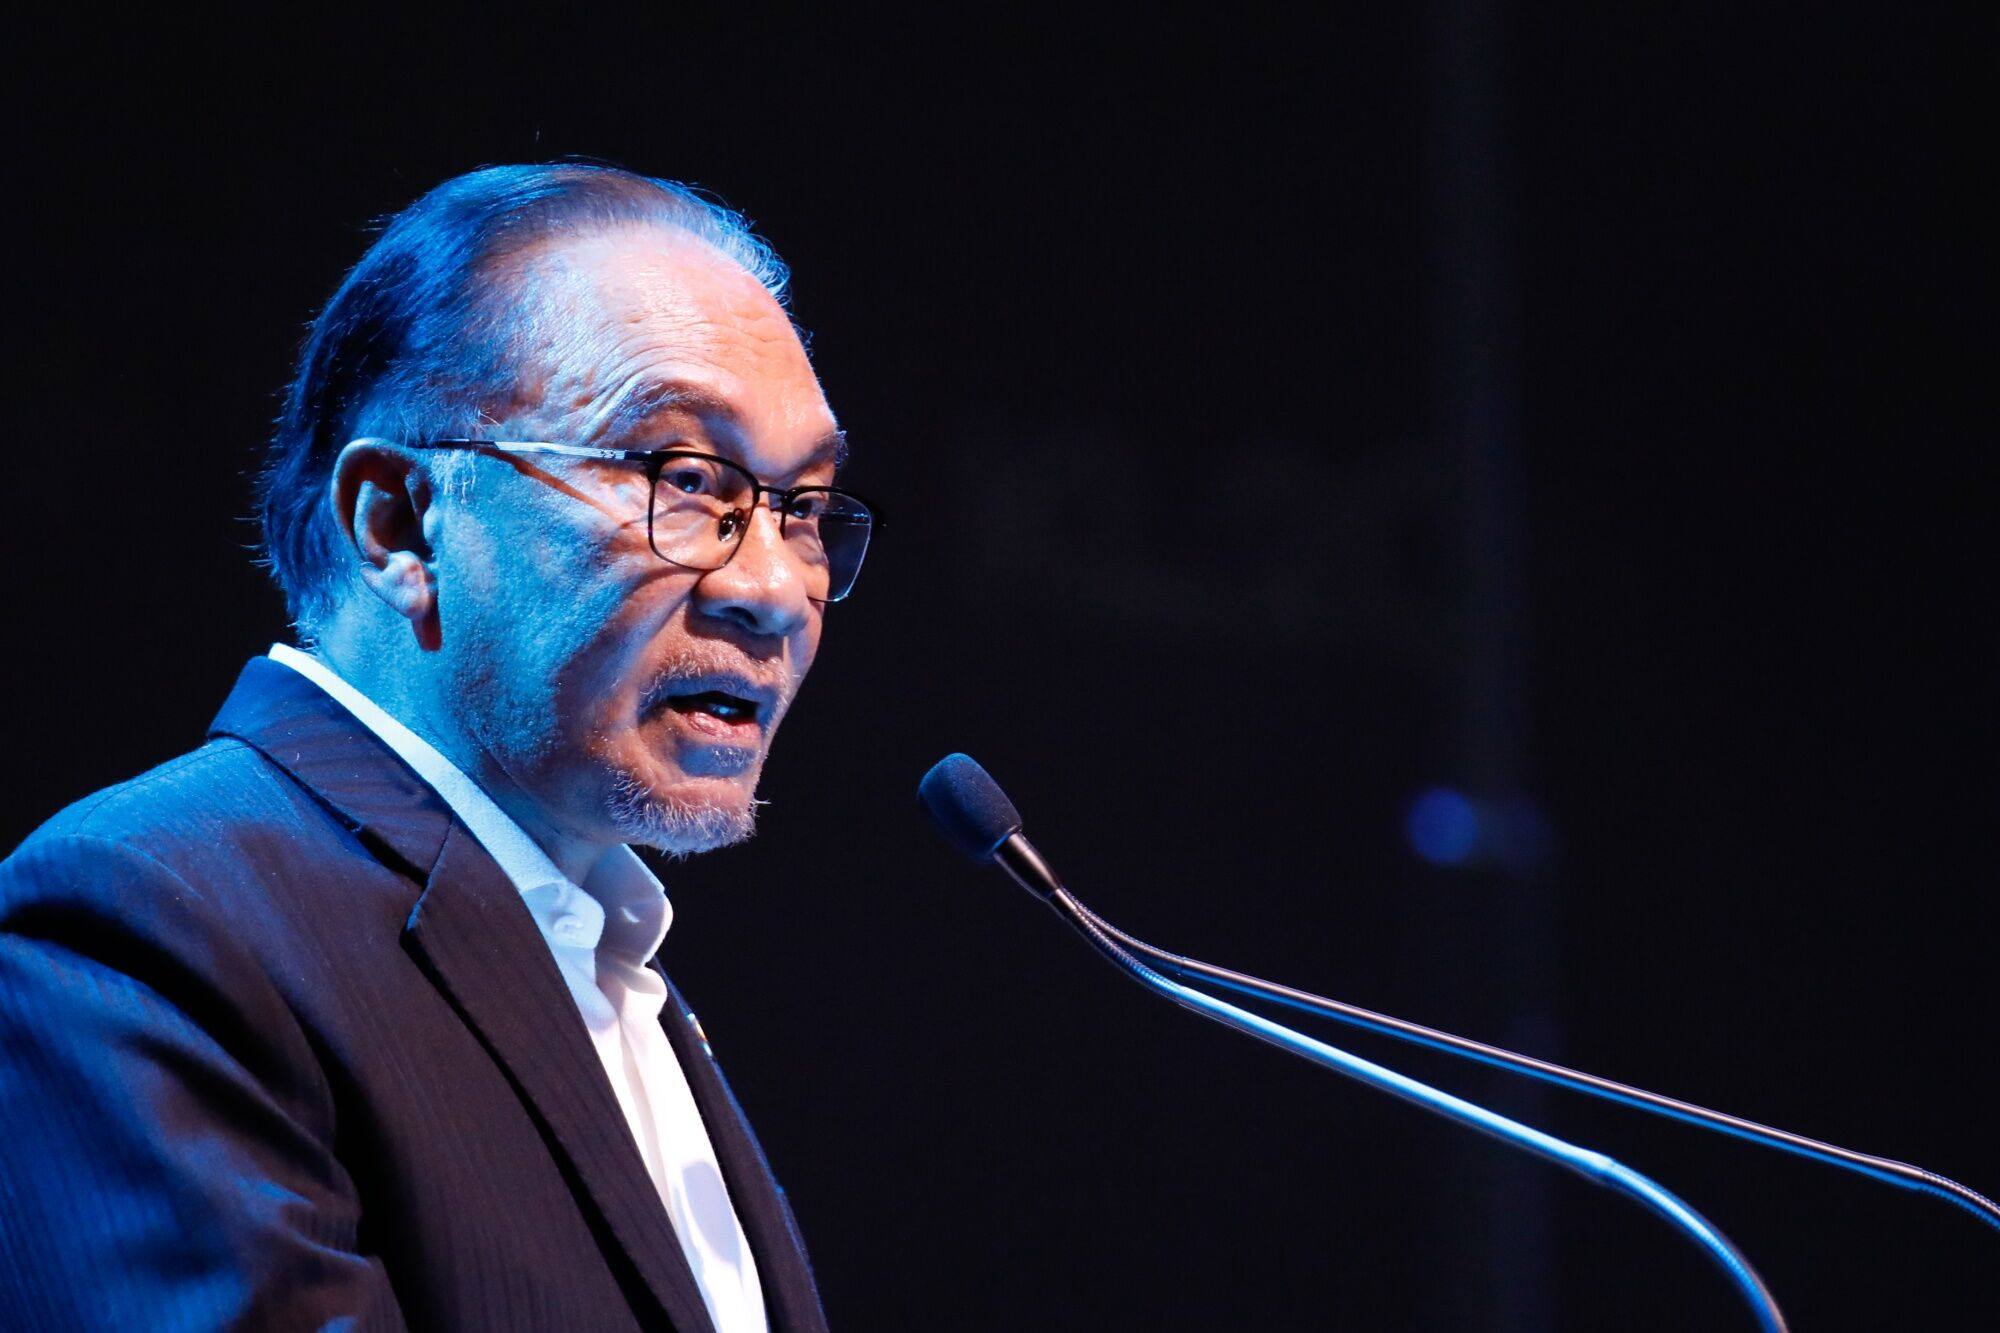 Malaysia’s Prime Minister Anwar Ibrahim speaking during the KL20 Tech Forum in Kuala Lumpur. Photo: Bloomberg